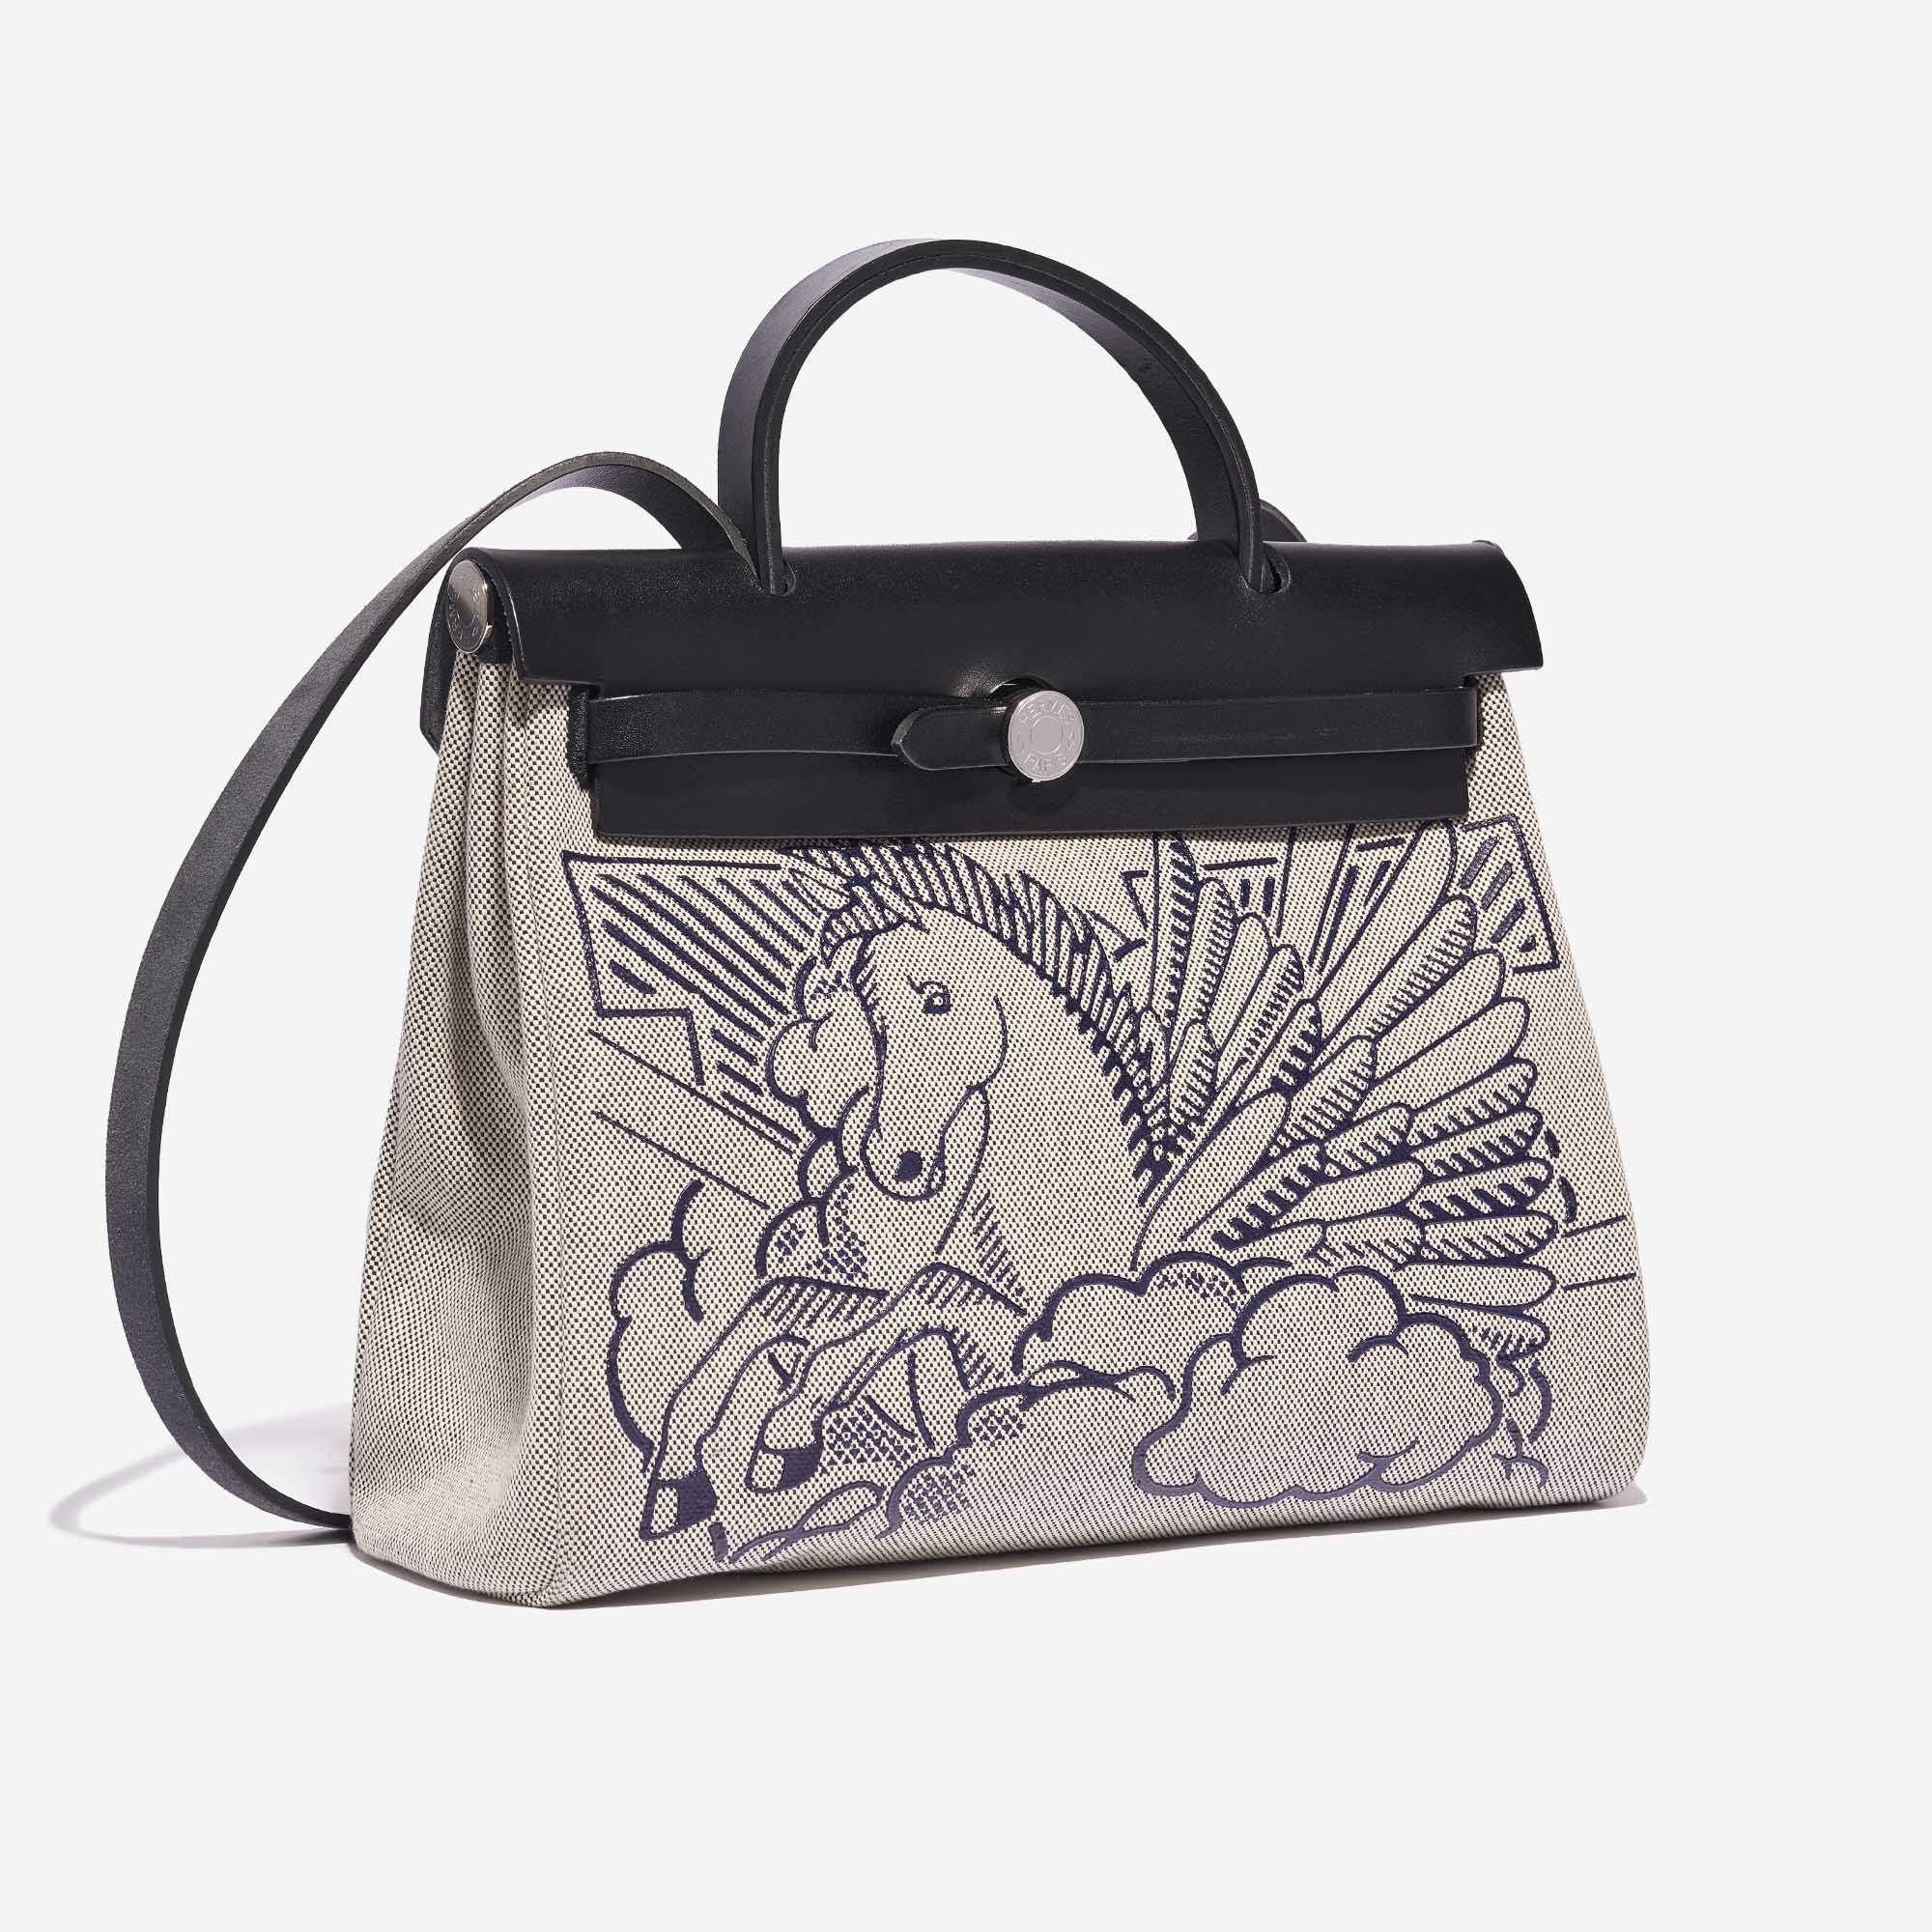 Hermès Pegasus Pop 31 Her Bag NEW!! 4995.00 #hermes #hermespegasus  #hermesherbag31